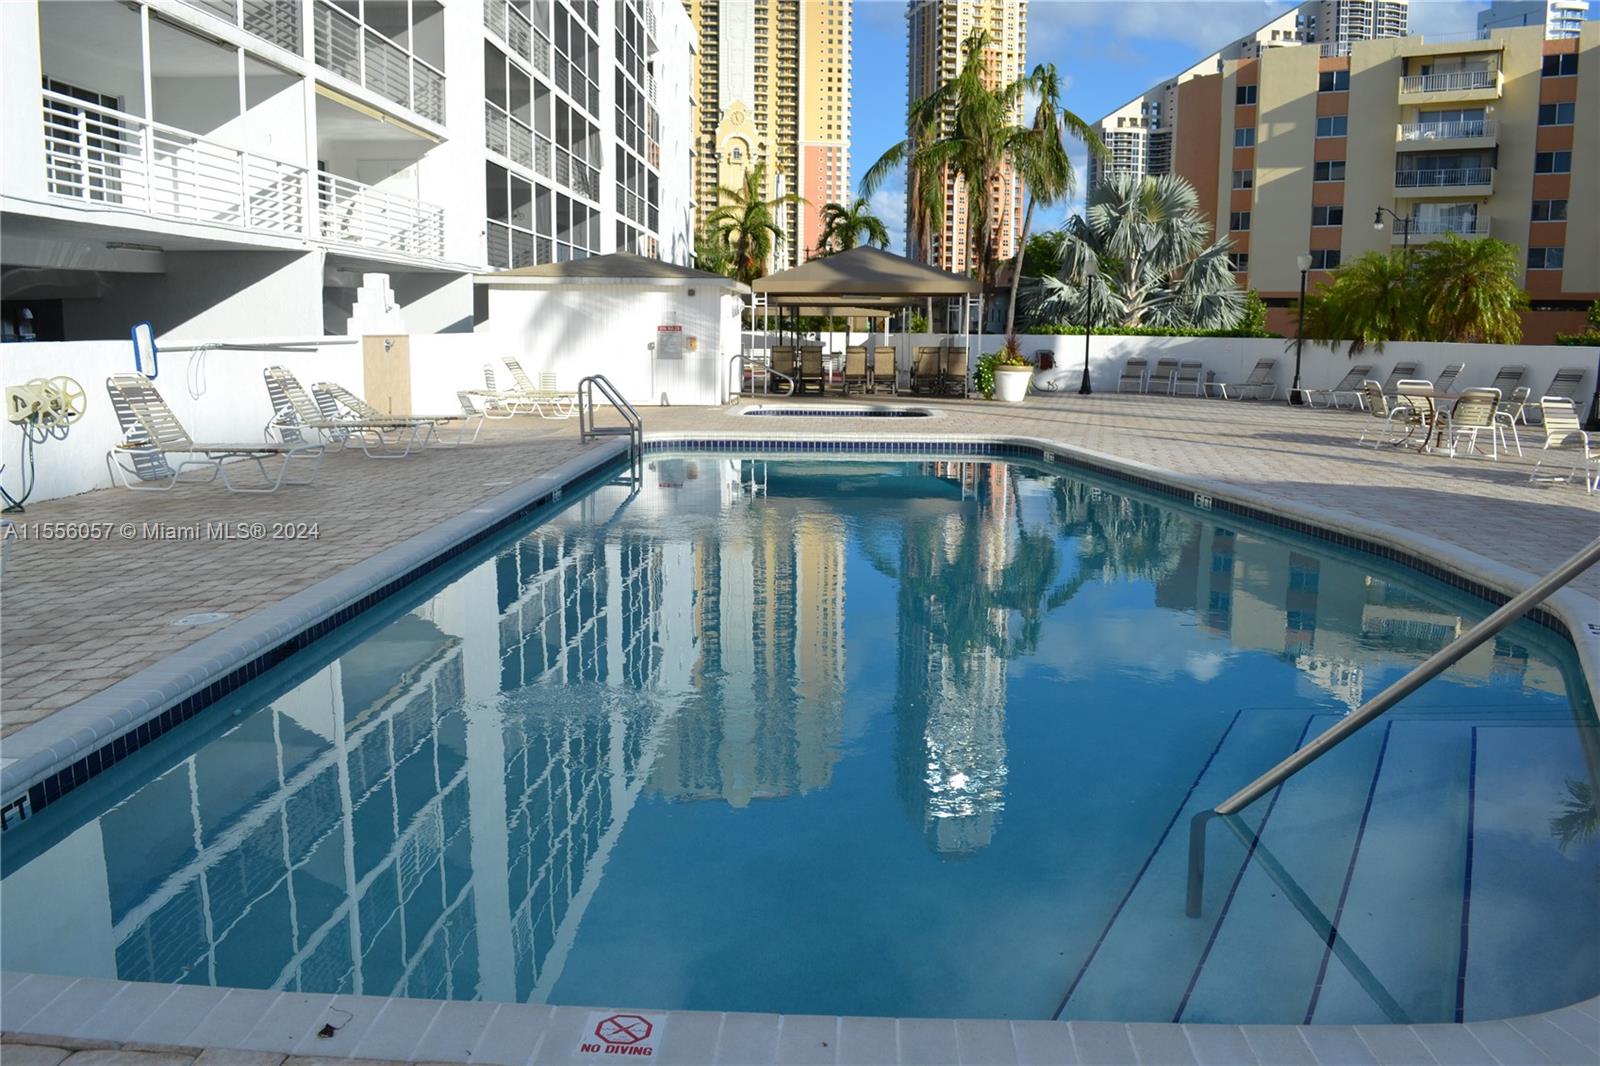 Rental Property at 17801 N Bay Rd 412, Sunny Isles Beach, Miami-Dade County, Florida - Bedrooms: 2 
Bathrooms: 2  - $3,000 MO.